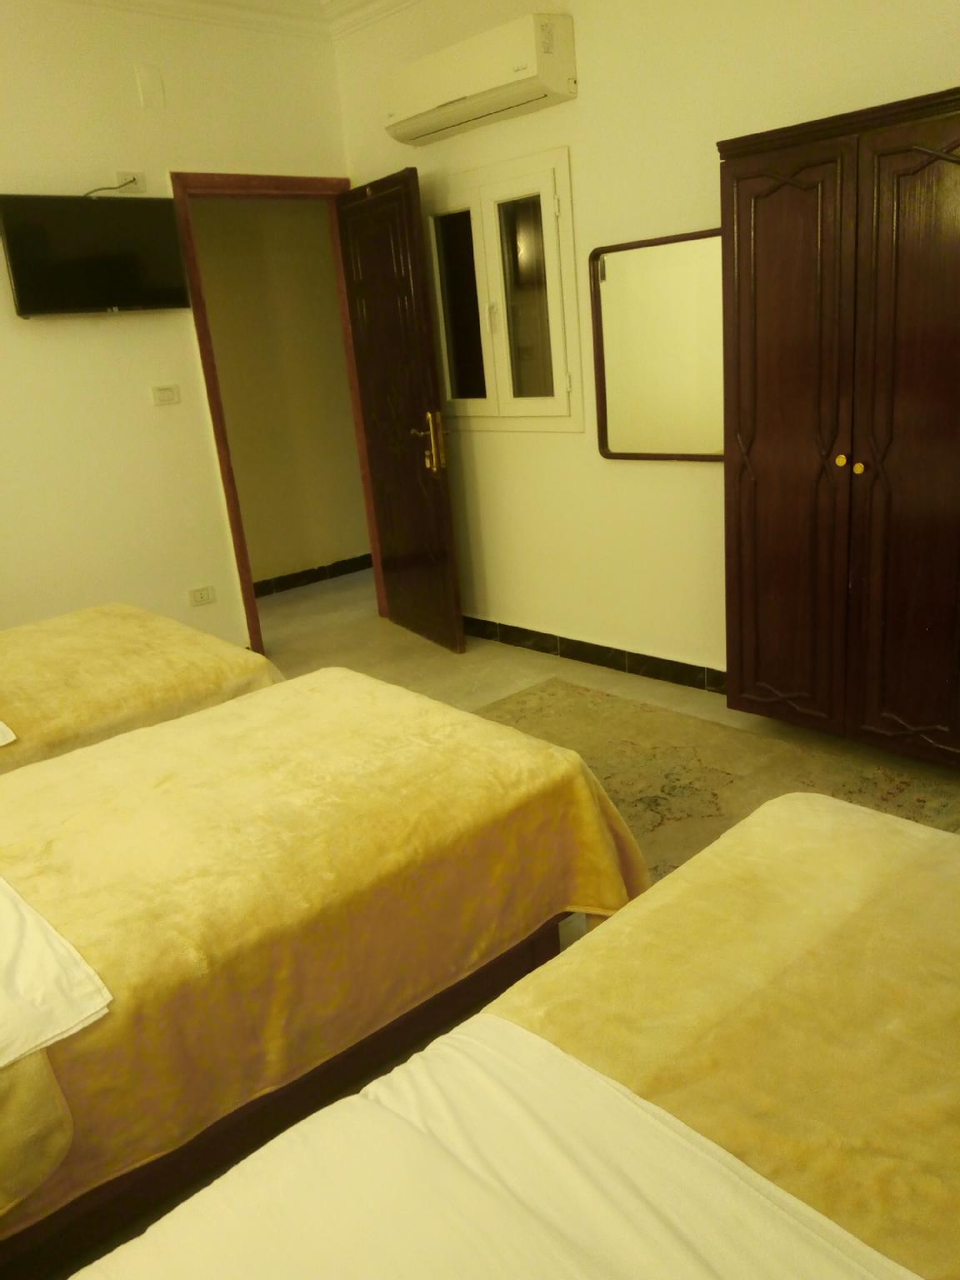 Bedroom 2, Arabian Nights Hostel, Al-Jamaliyah